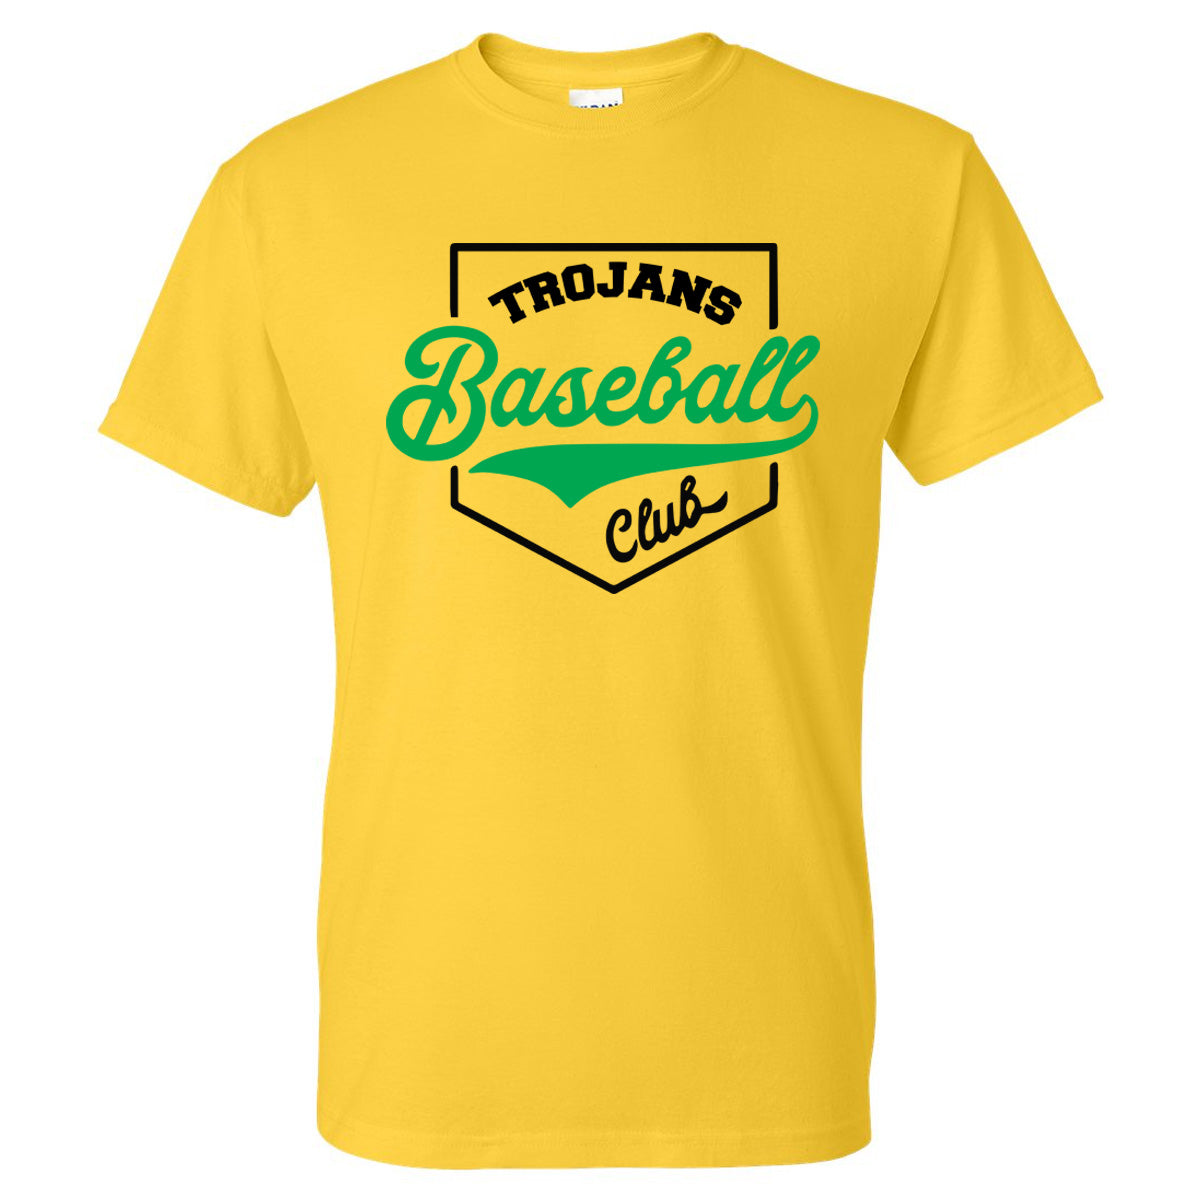 TWIGGS ACADEMY - TROJANS BASEBALL CLUB - Yellow (Tee/DriFit/Hoodie/Sweatshirt) - Southern Grace Creations